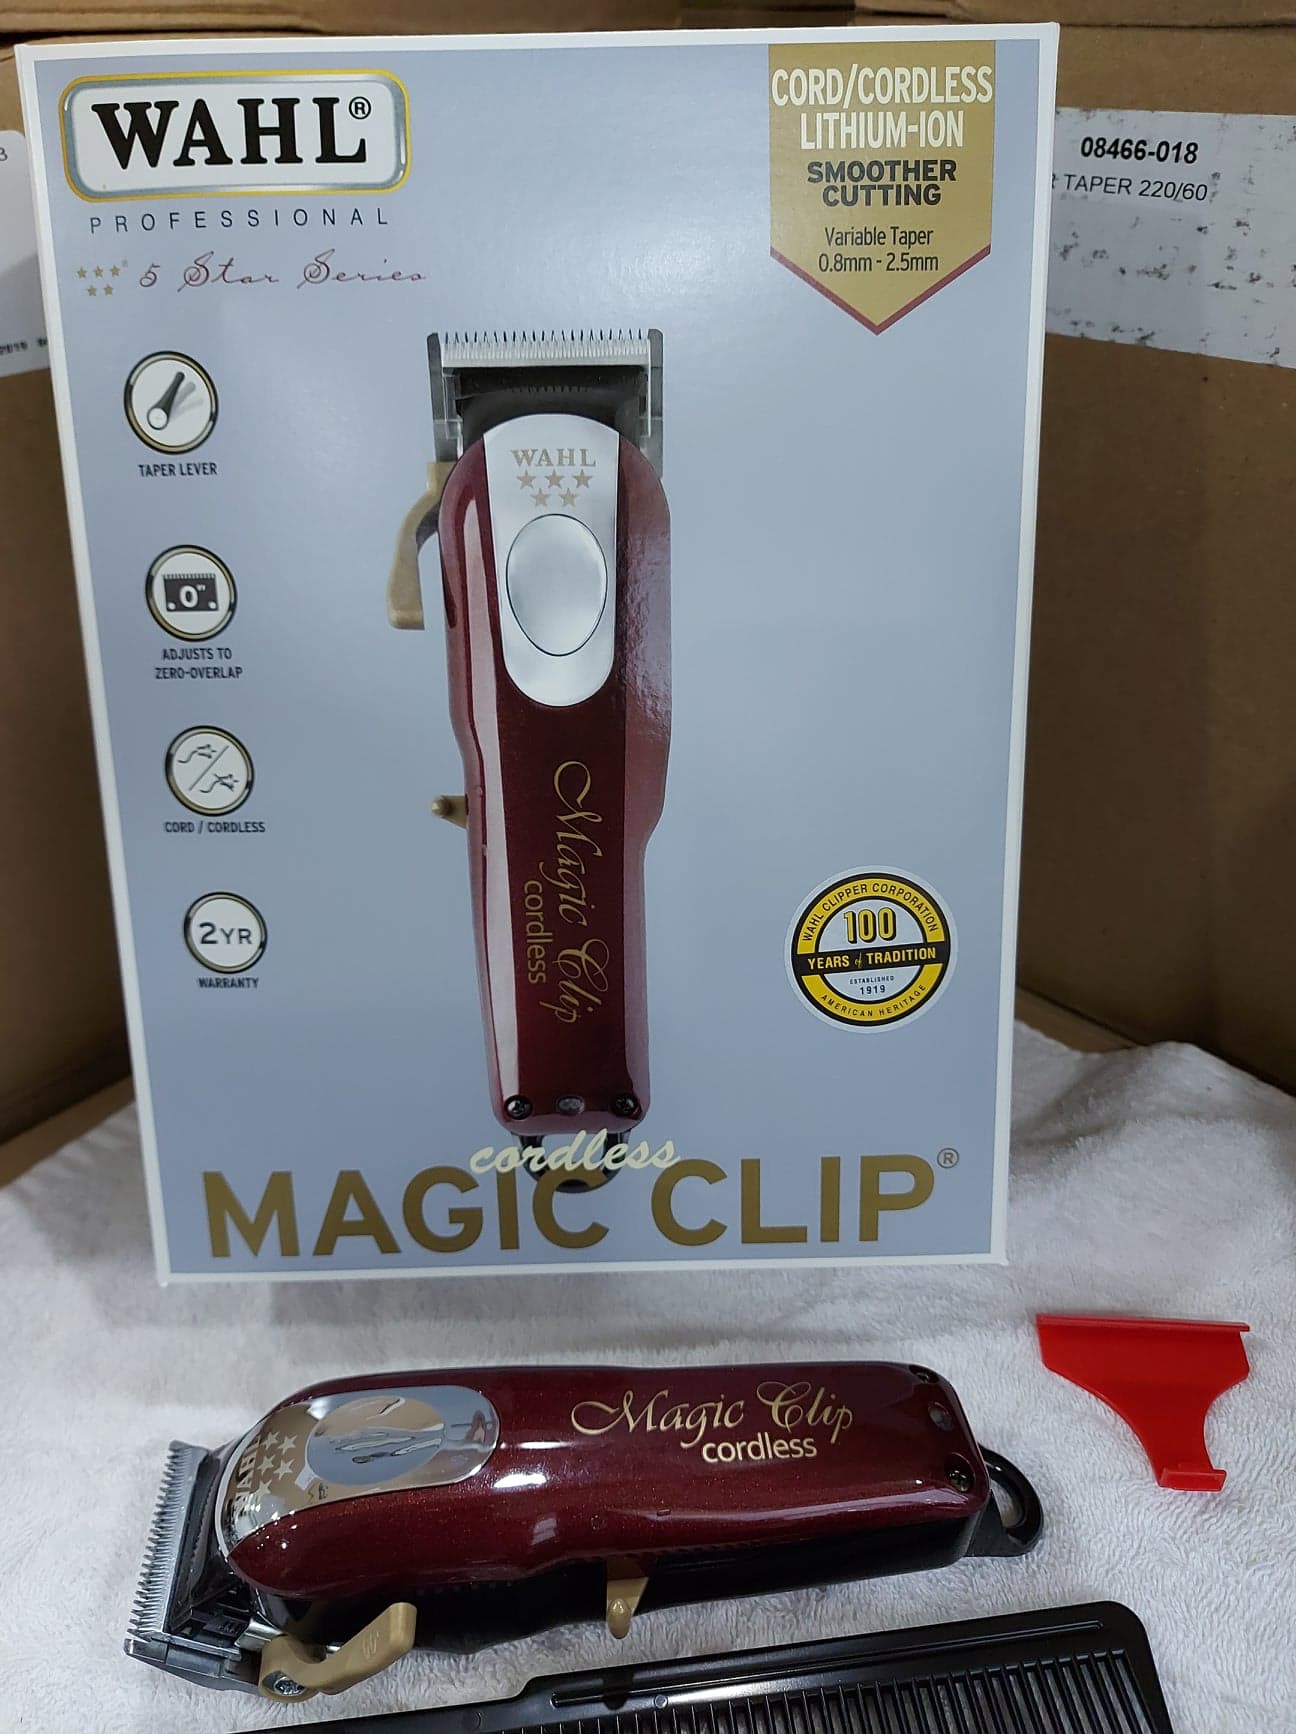 wahl magic clip sale